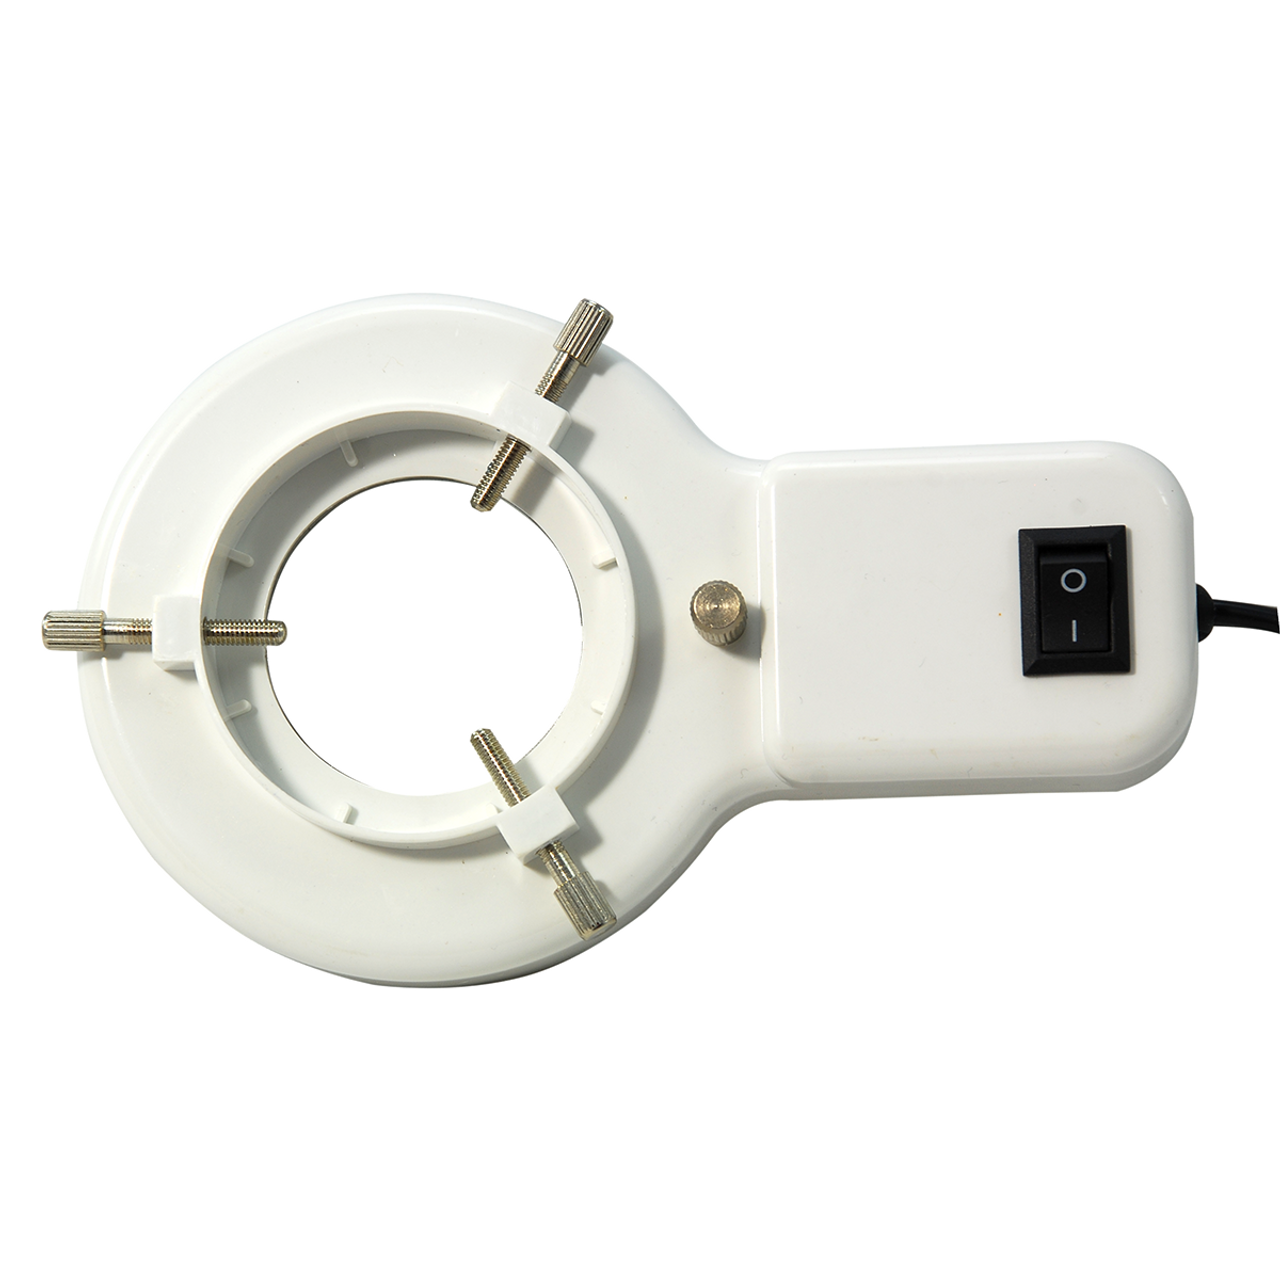 Wholesale 60mm Purple LED Microscope UV Ring Lamp For Microscope  Illumination From Dejx, $56.34 | DHgate.Com